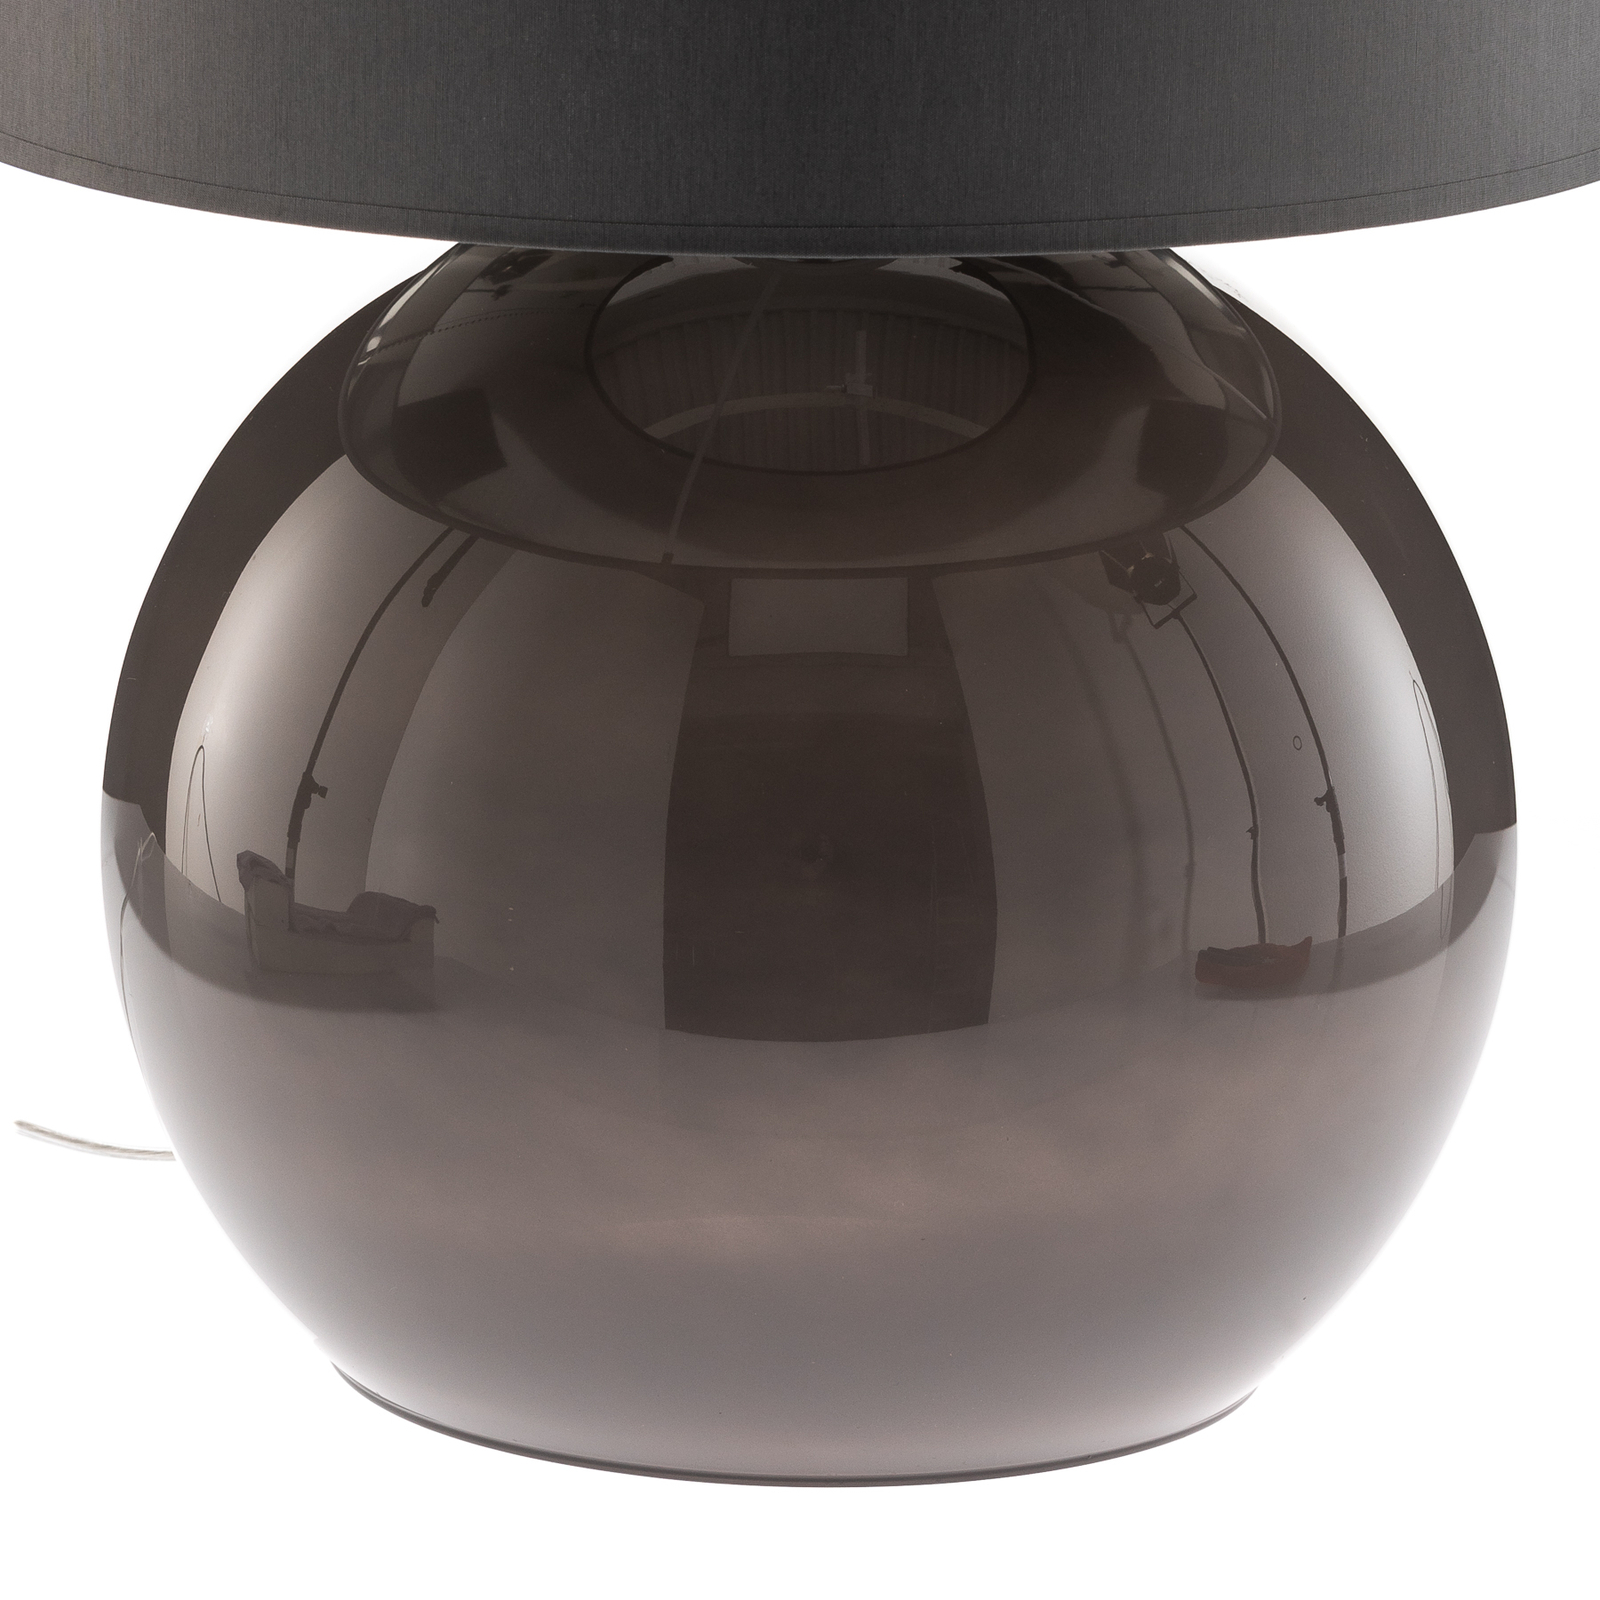 Palla tafellamp, Ø 36 cm, grijs/grafiet